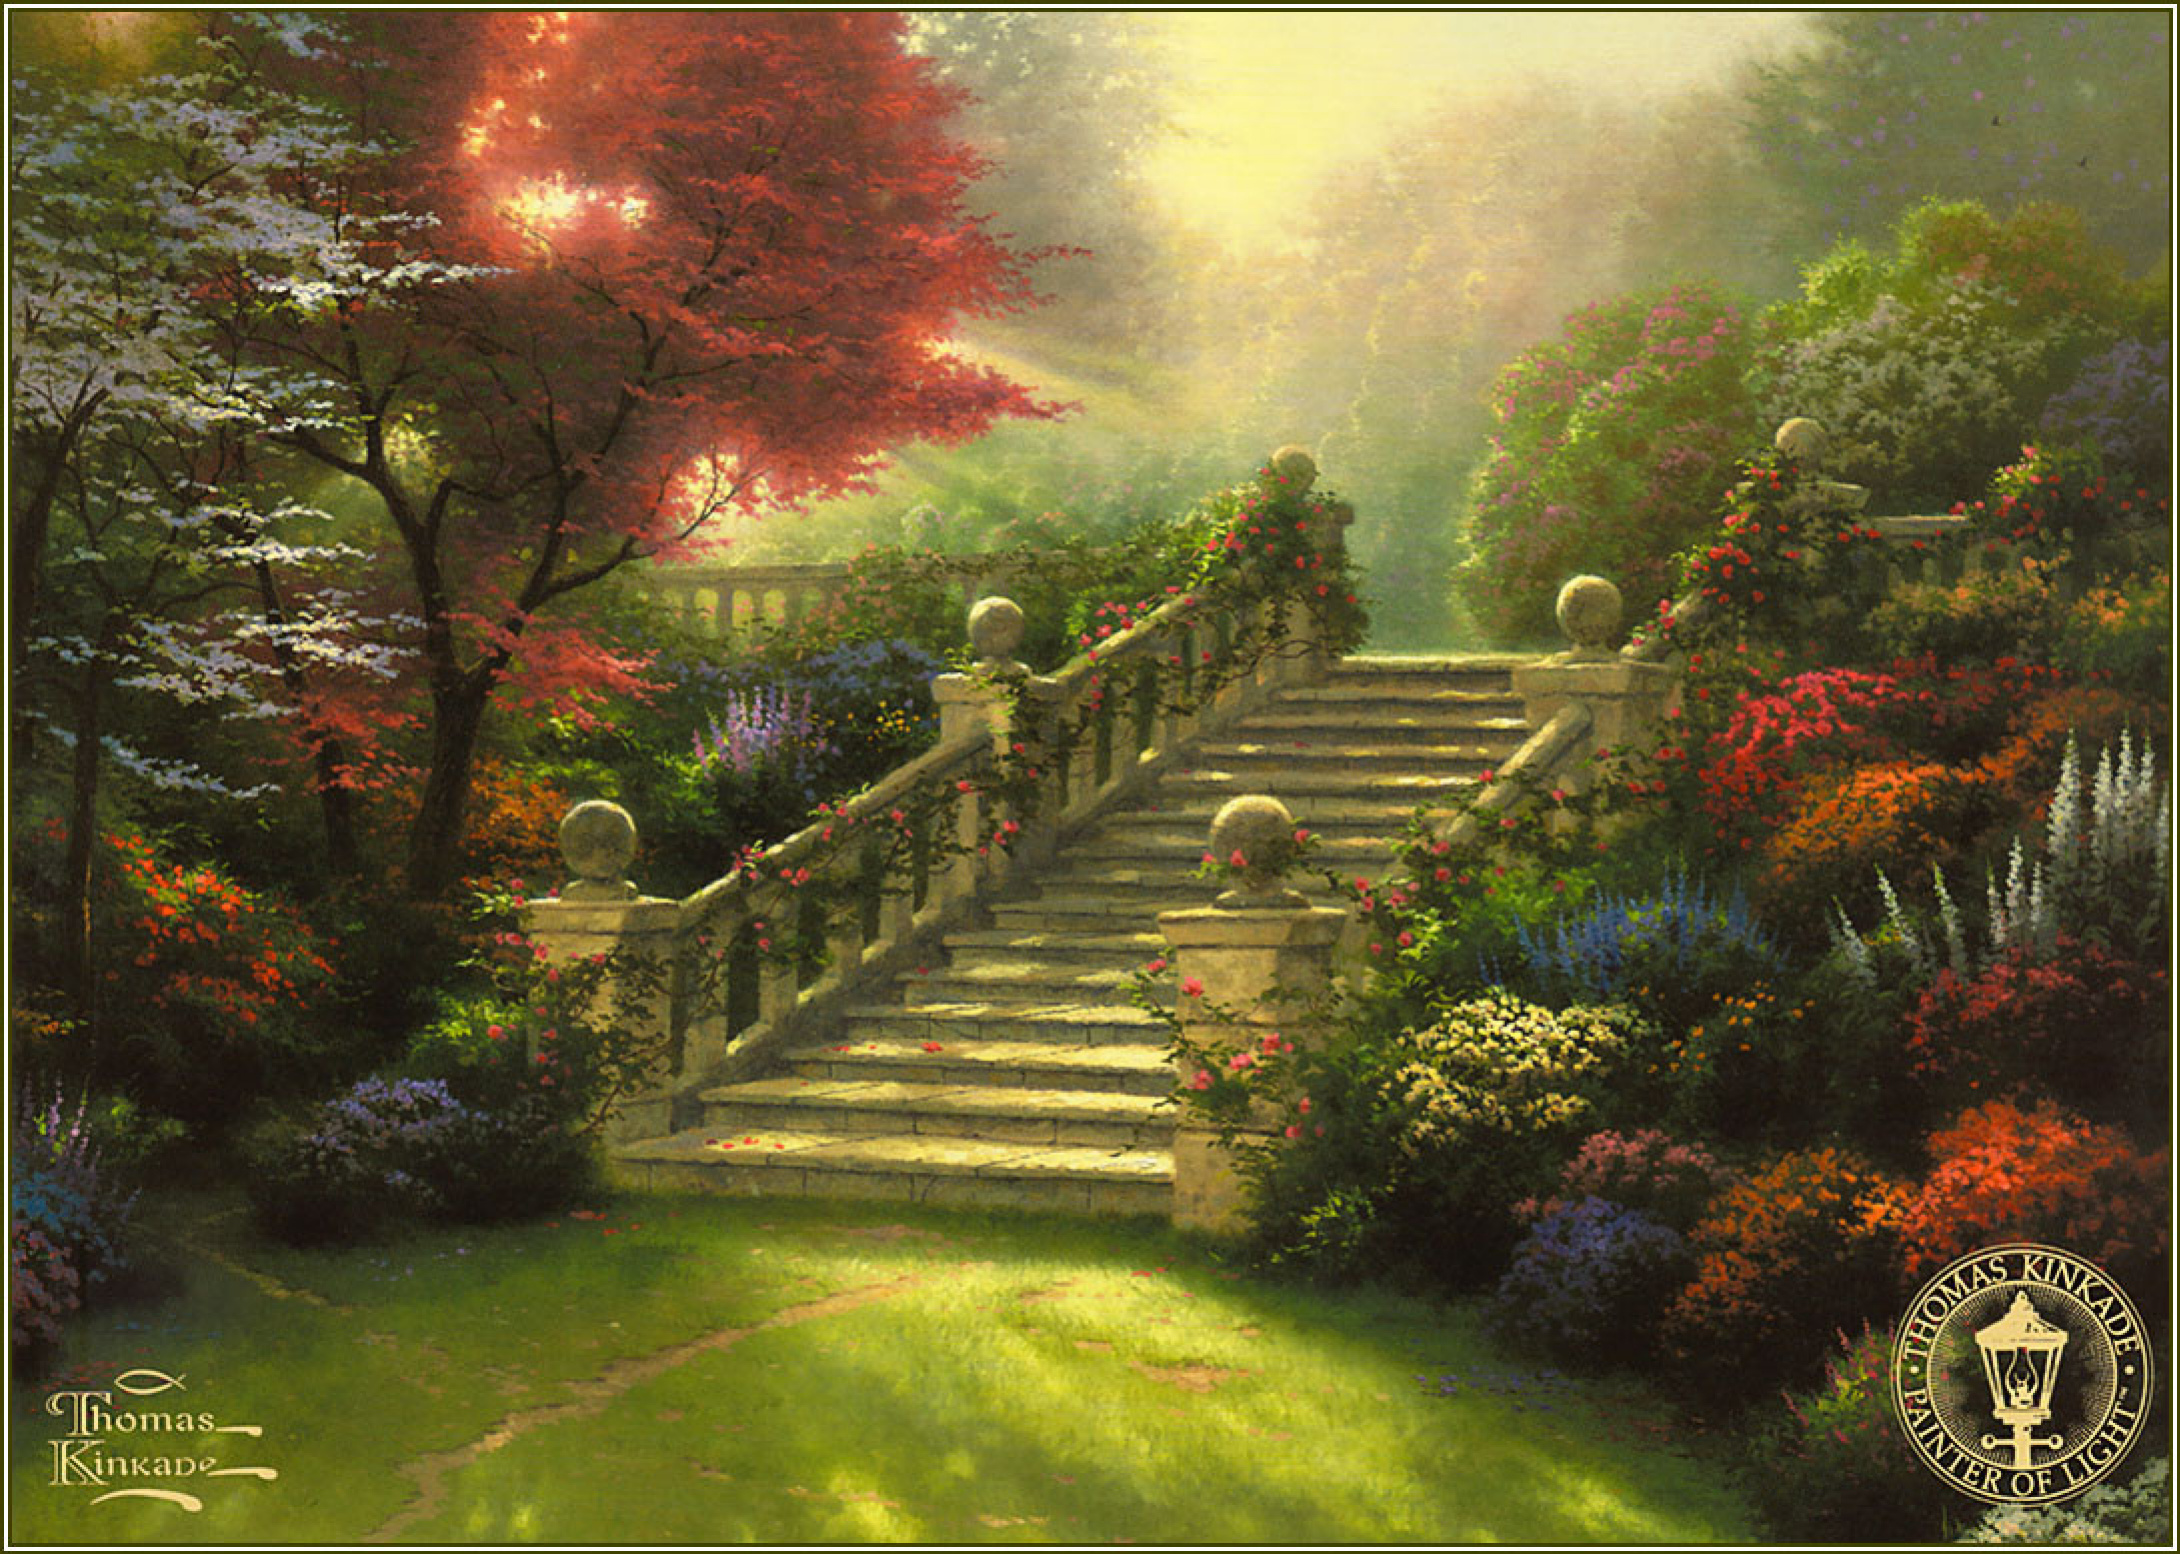 Stairway to Heaven Painting